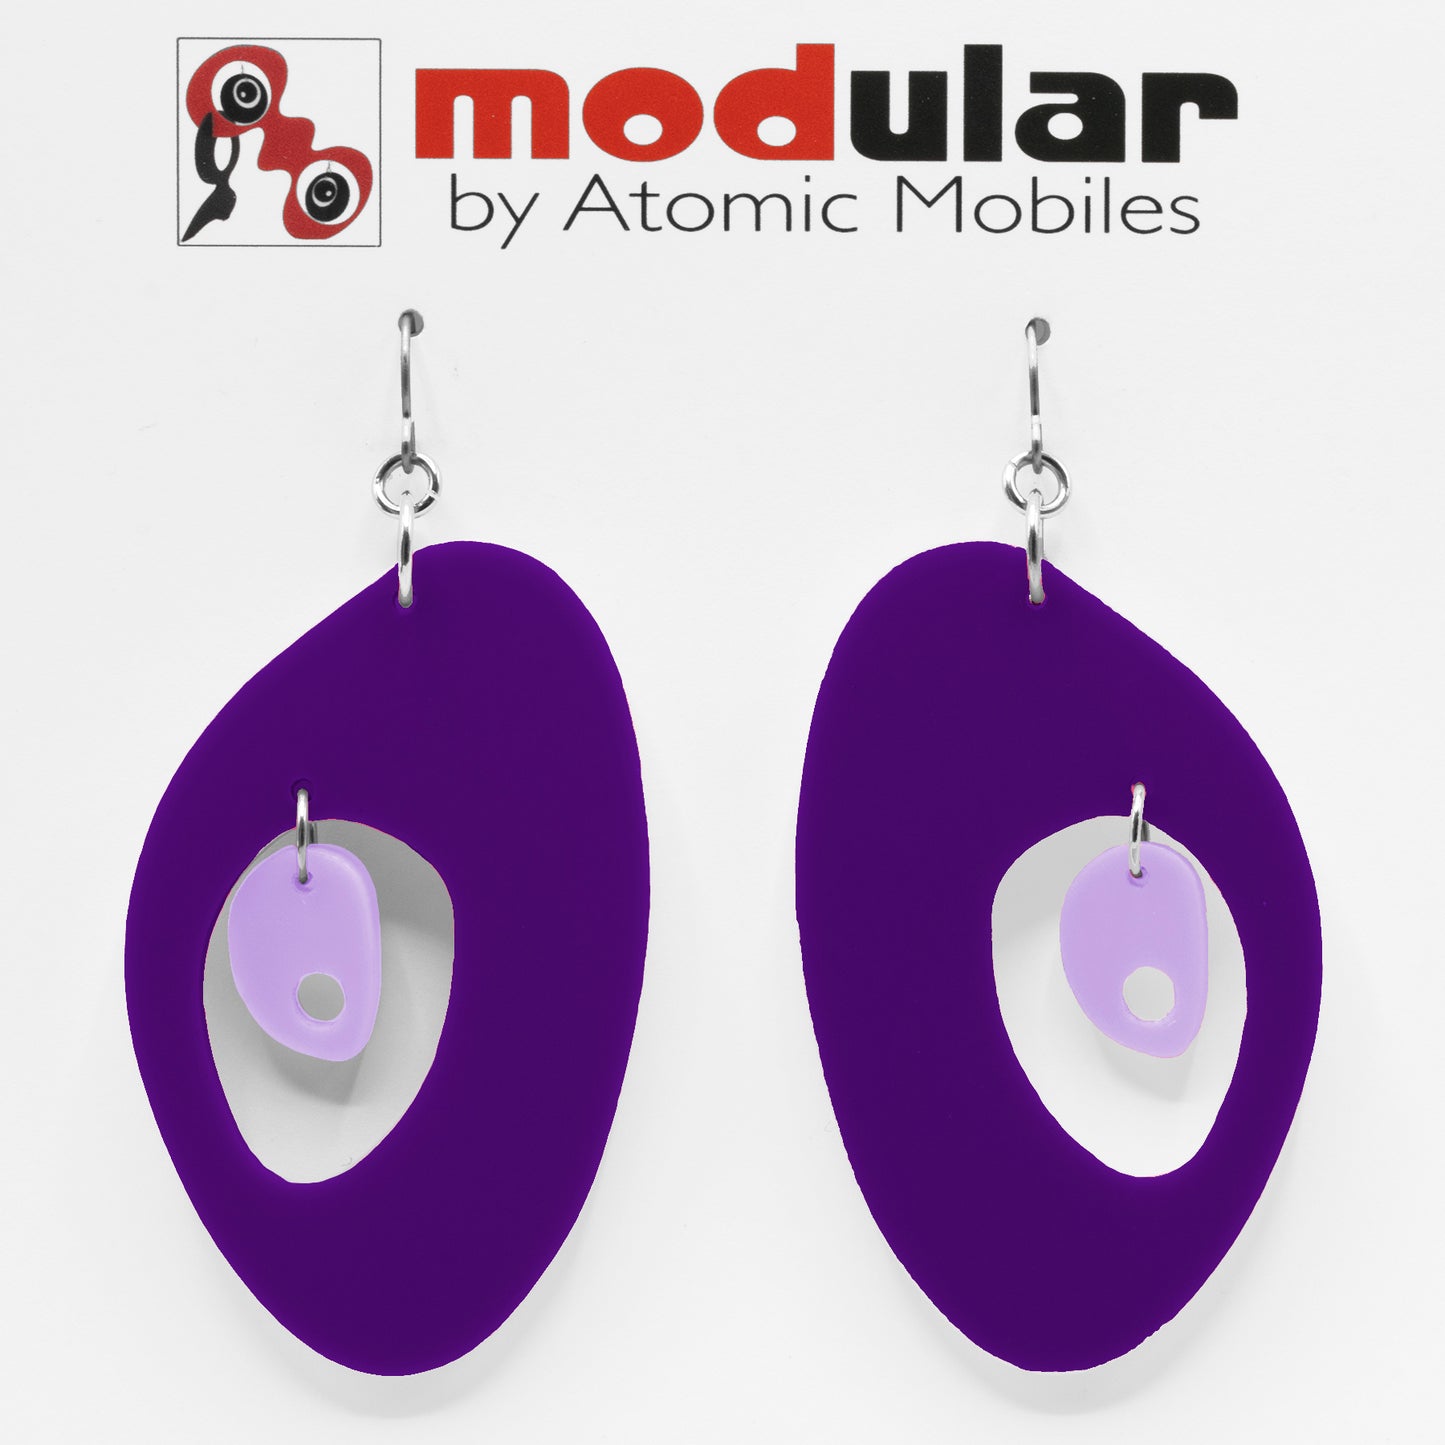 MODular Earrings - The Modernist Statement Earrings in Purple by AtomicMobiles.com - retro era inspired mod handmade jewelry